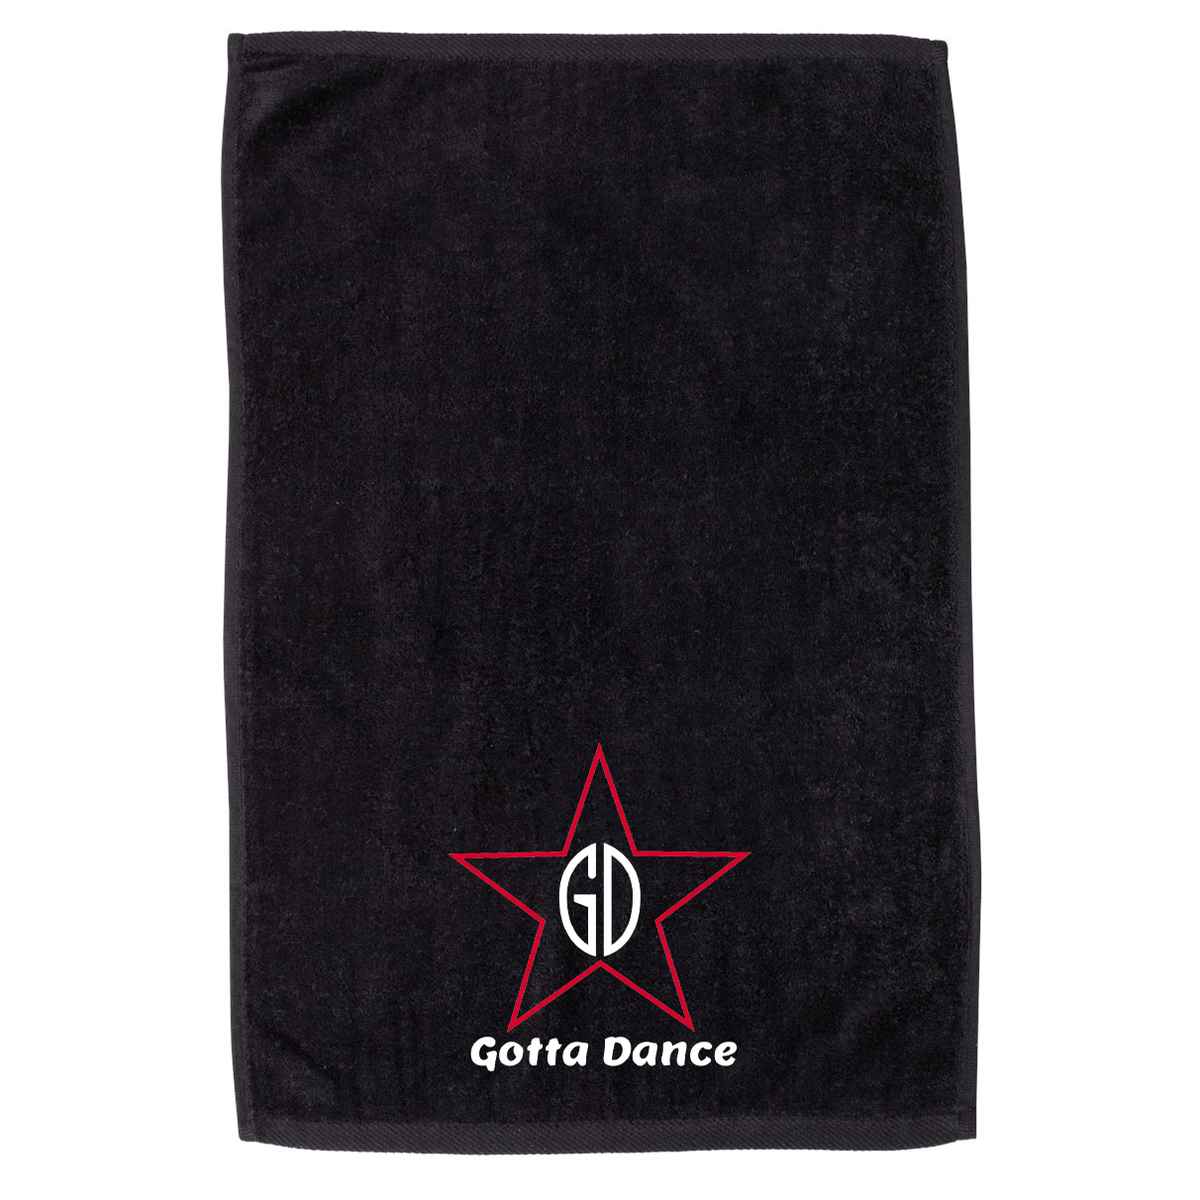 Gotta Dance Deluxe Hemmed Towel